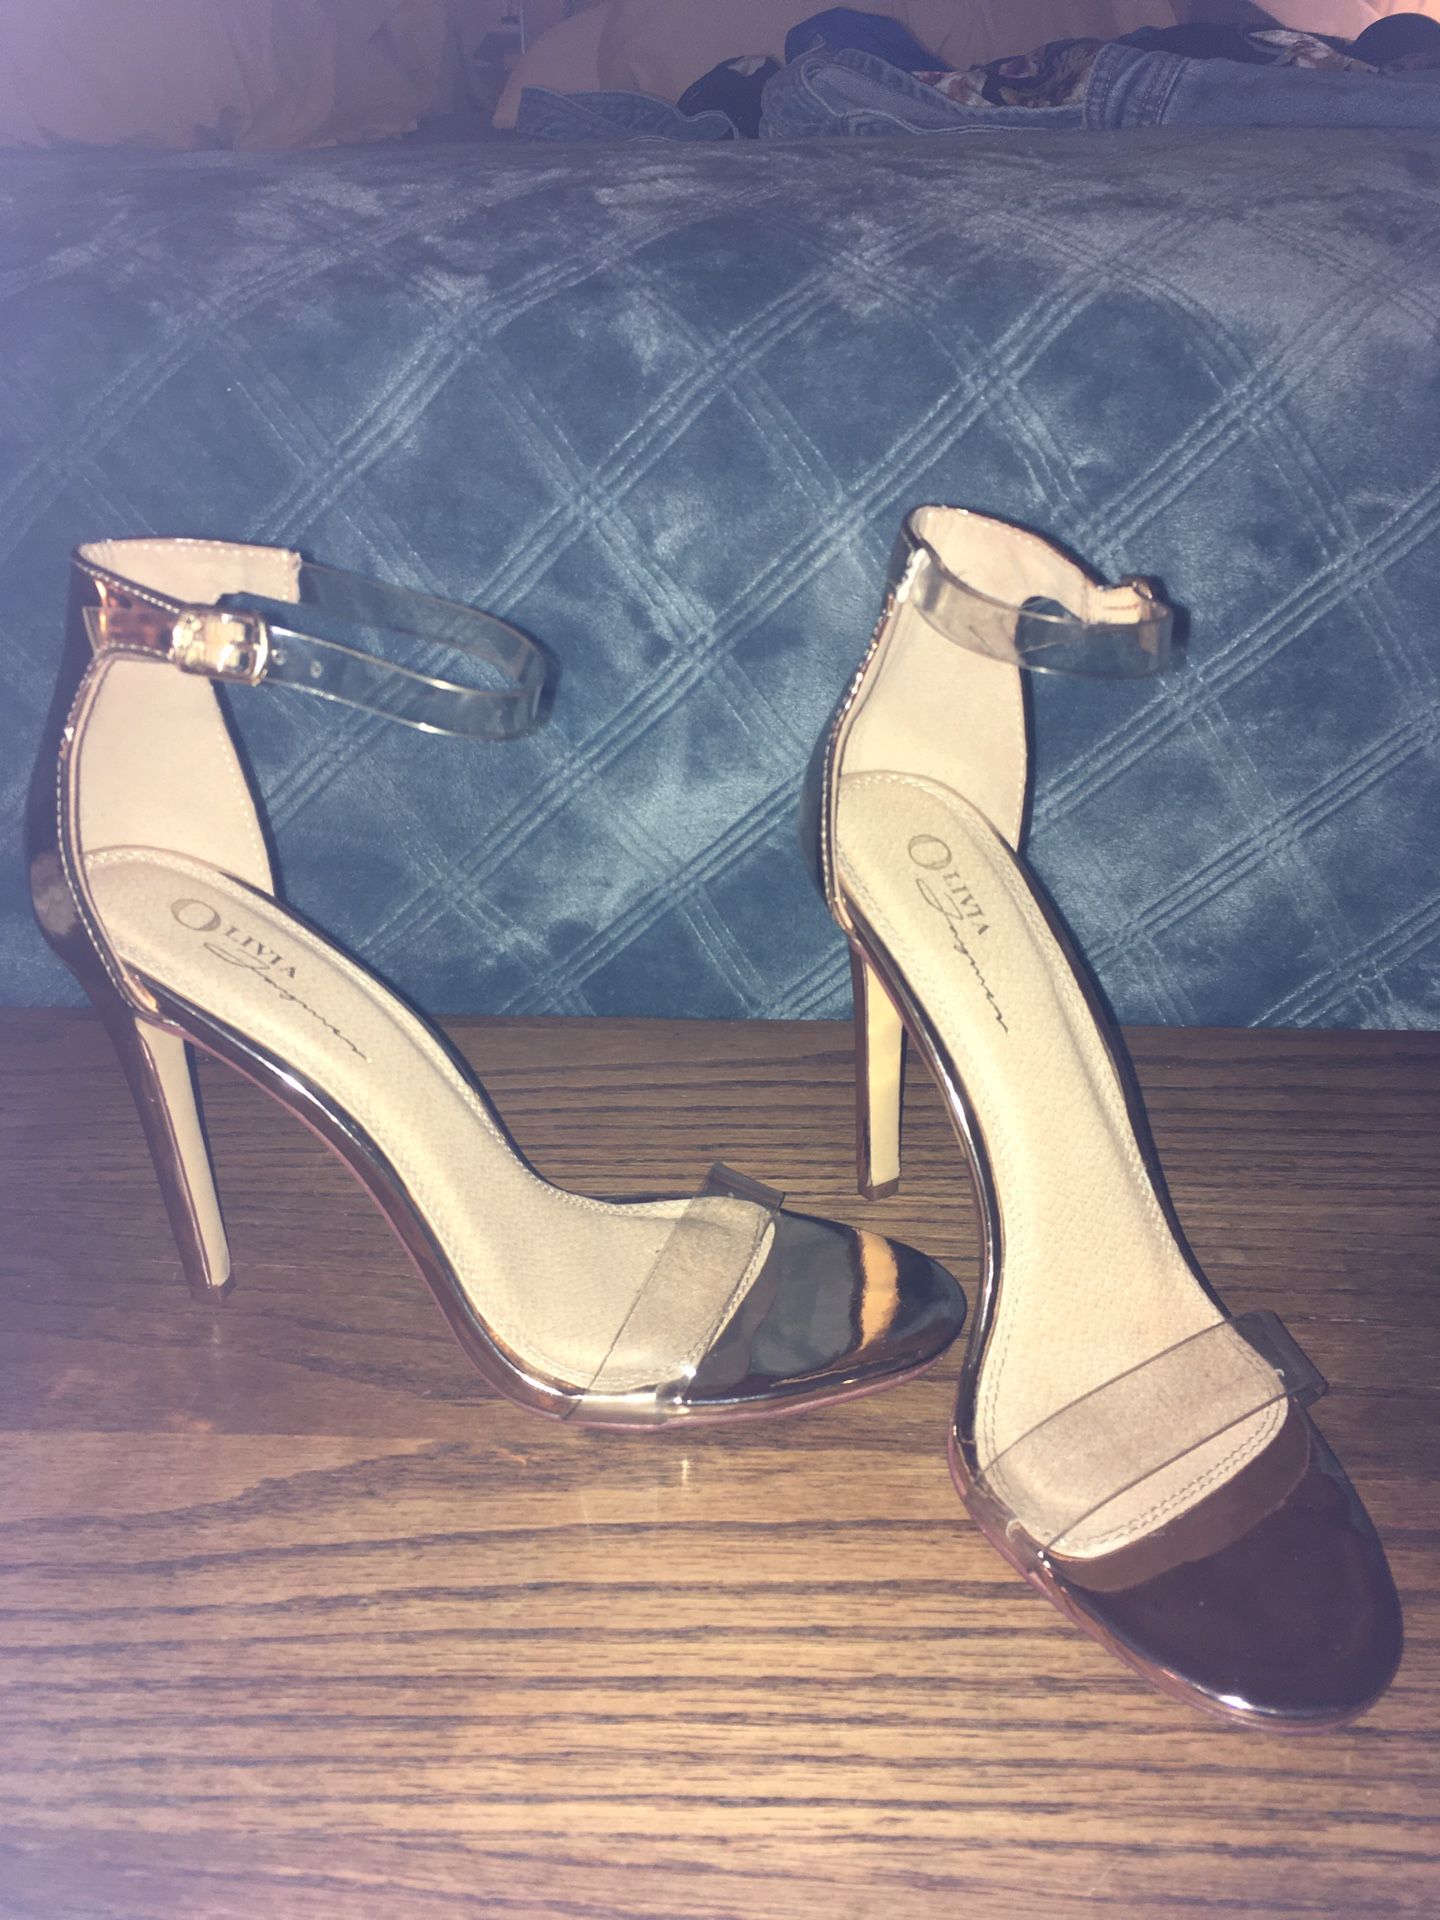 2 pair of Sexy High heels